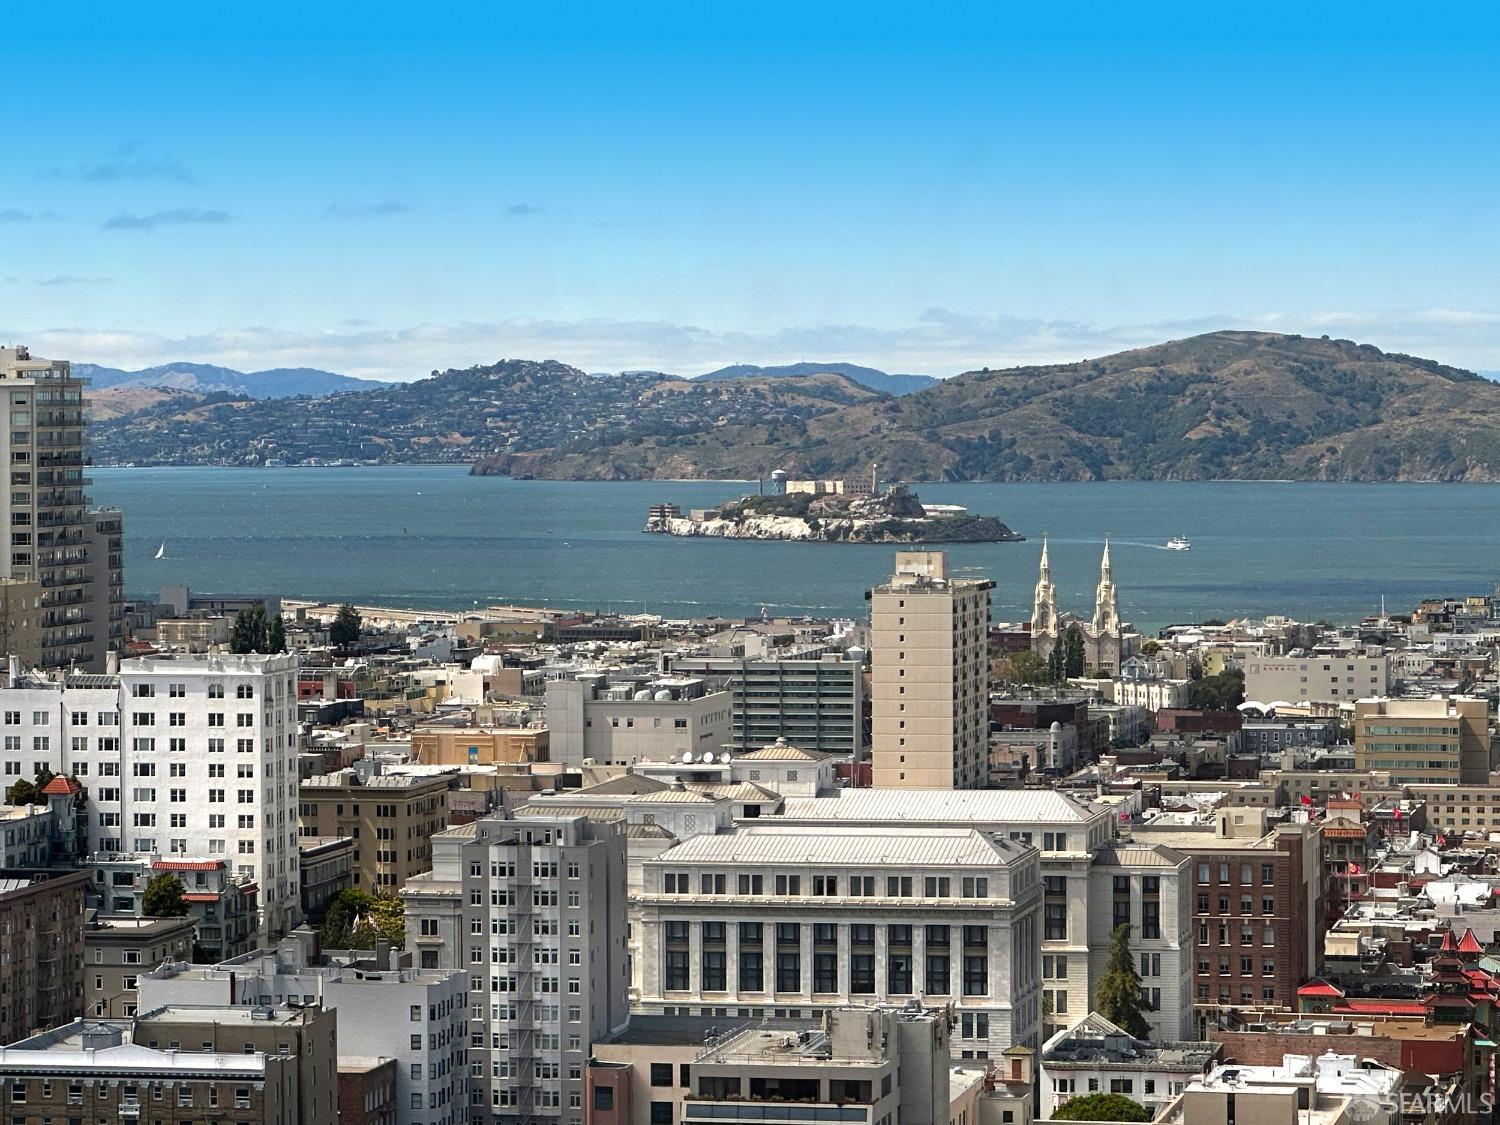 View of San Francisco Bay and Alcatraz Island